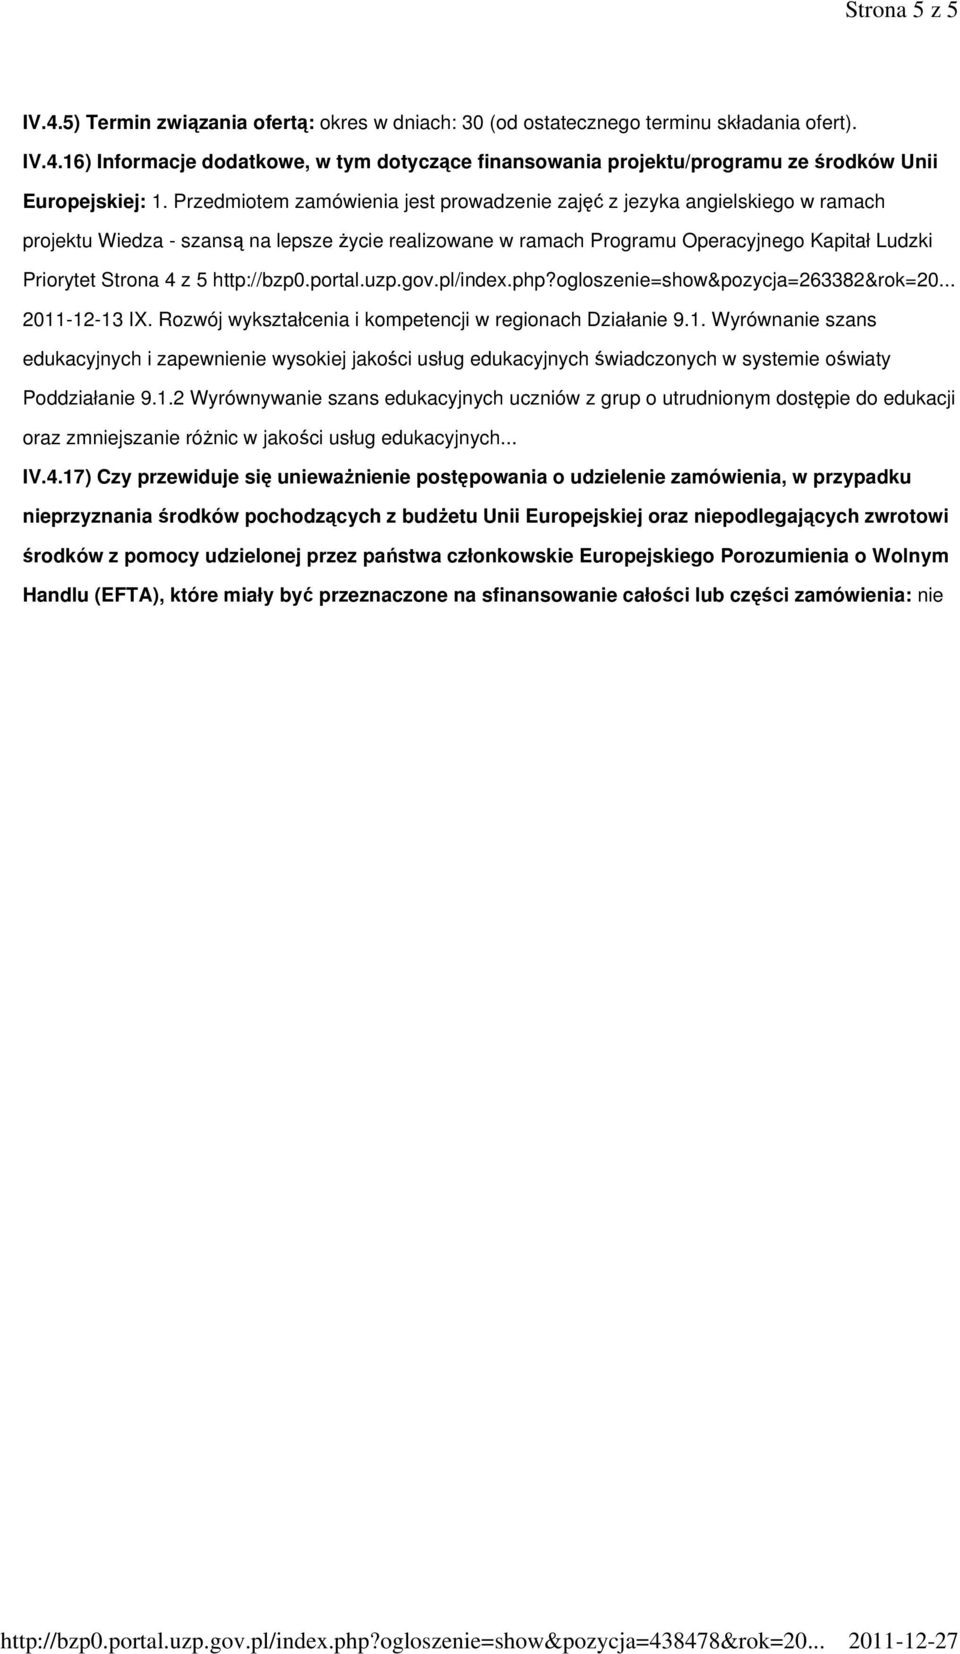 http://bzp0.portal.uzp.gov.pl/index.php?ogloszenie=show&pozycja=263382&rok=20... 2011